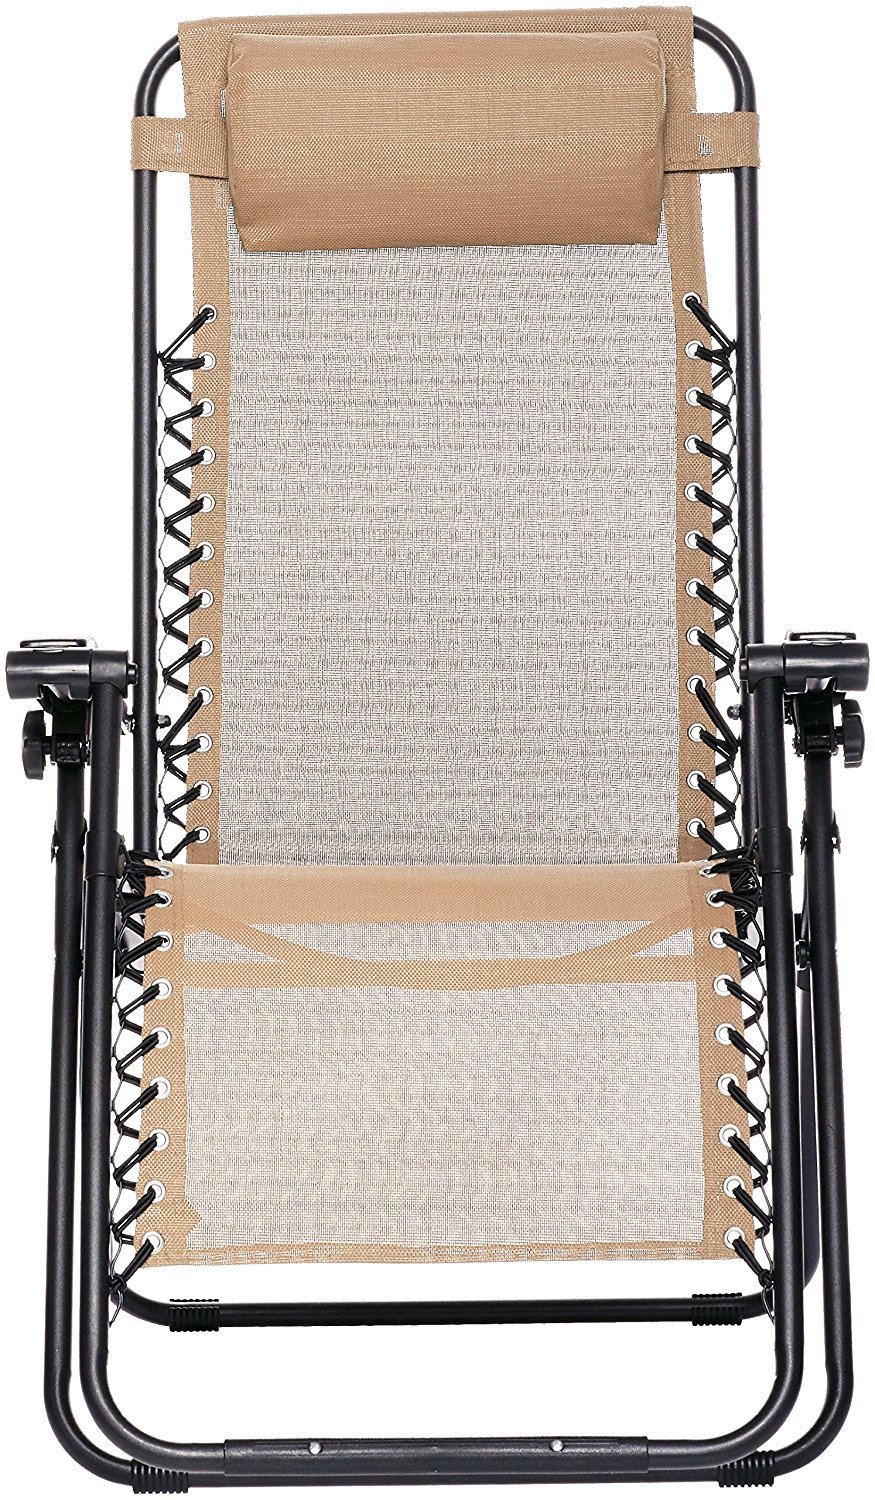 AmazonBasics-Zero-Gravity-Chair-4